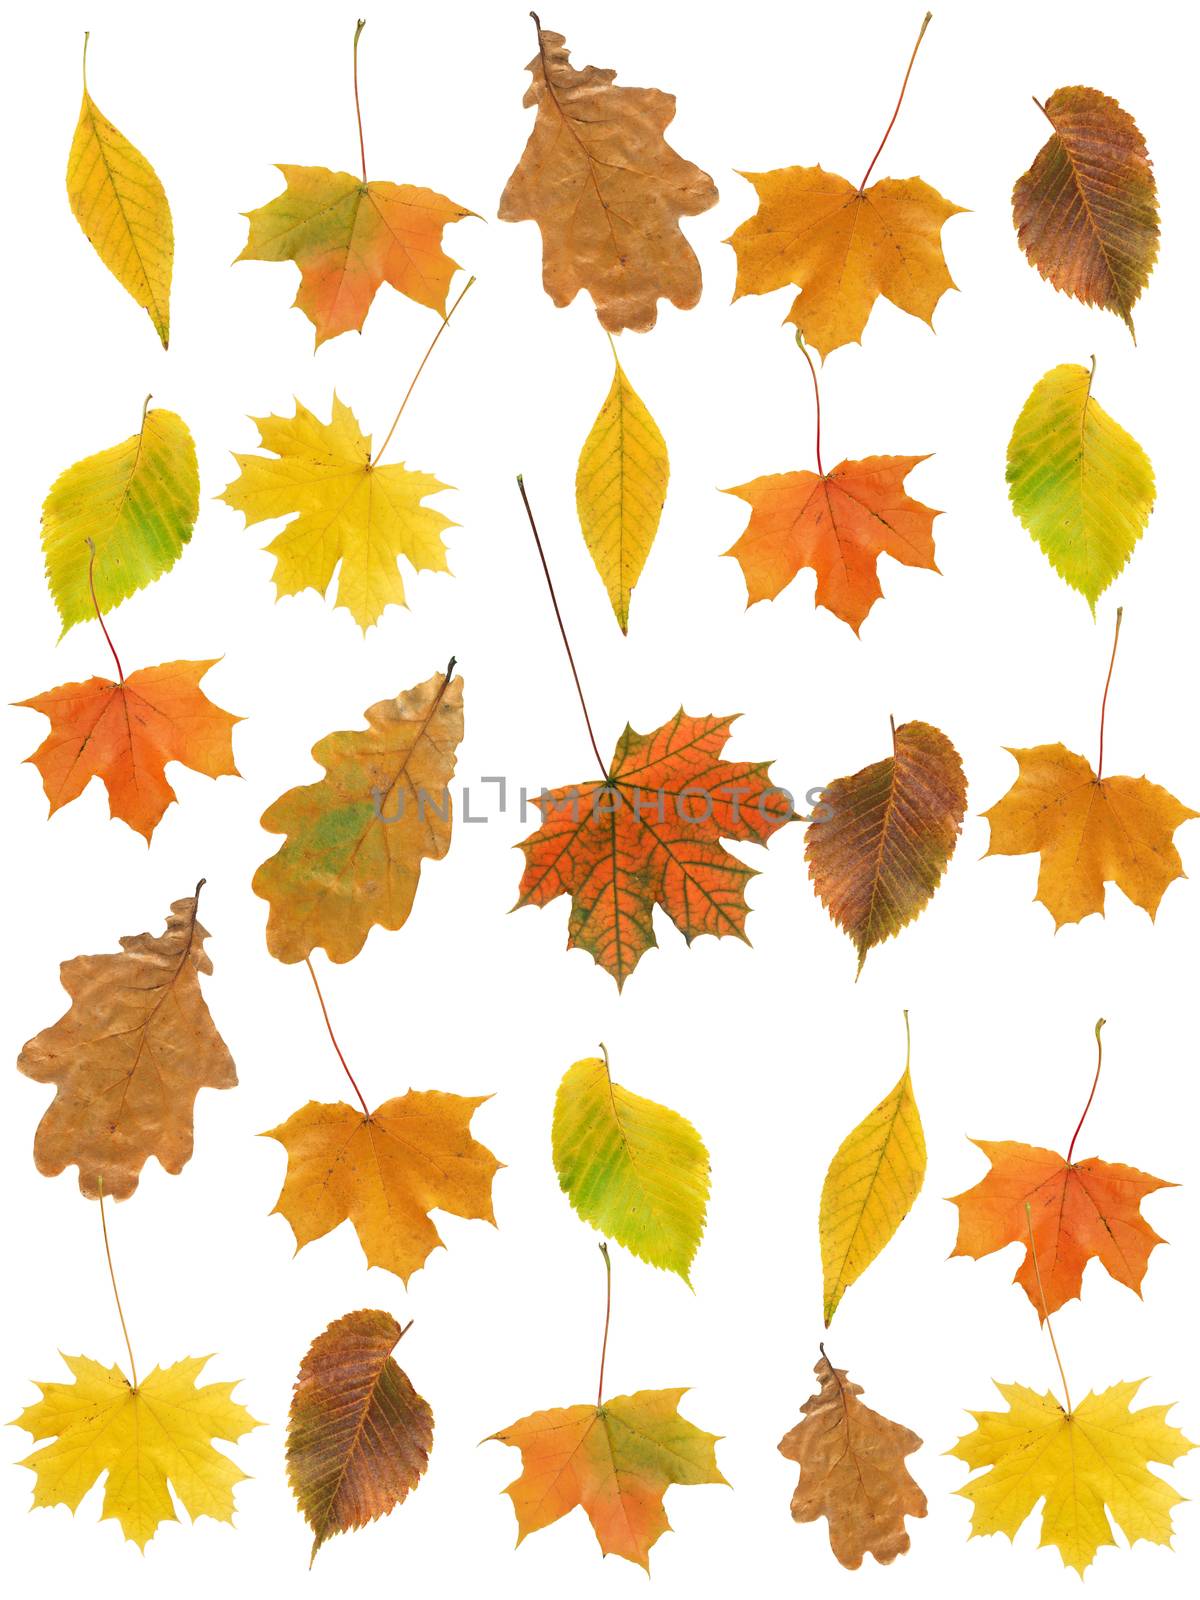 Autumn Leaves Background by kvkirillov